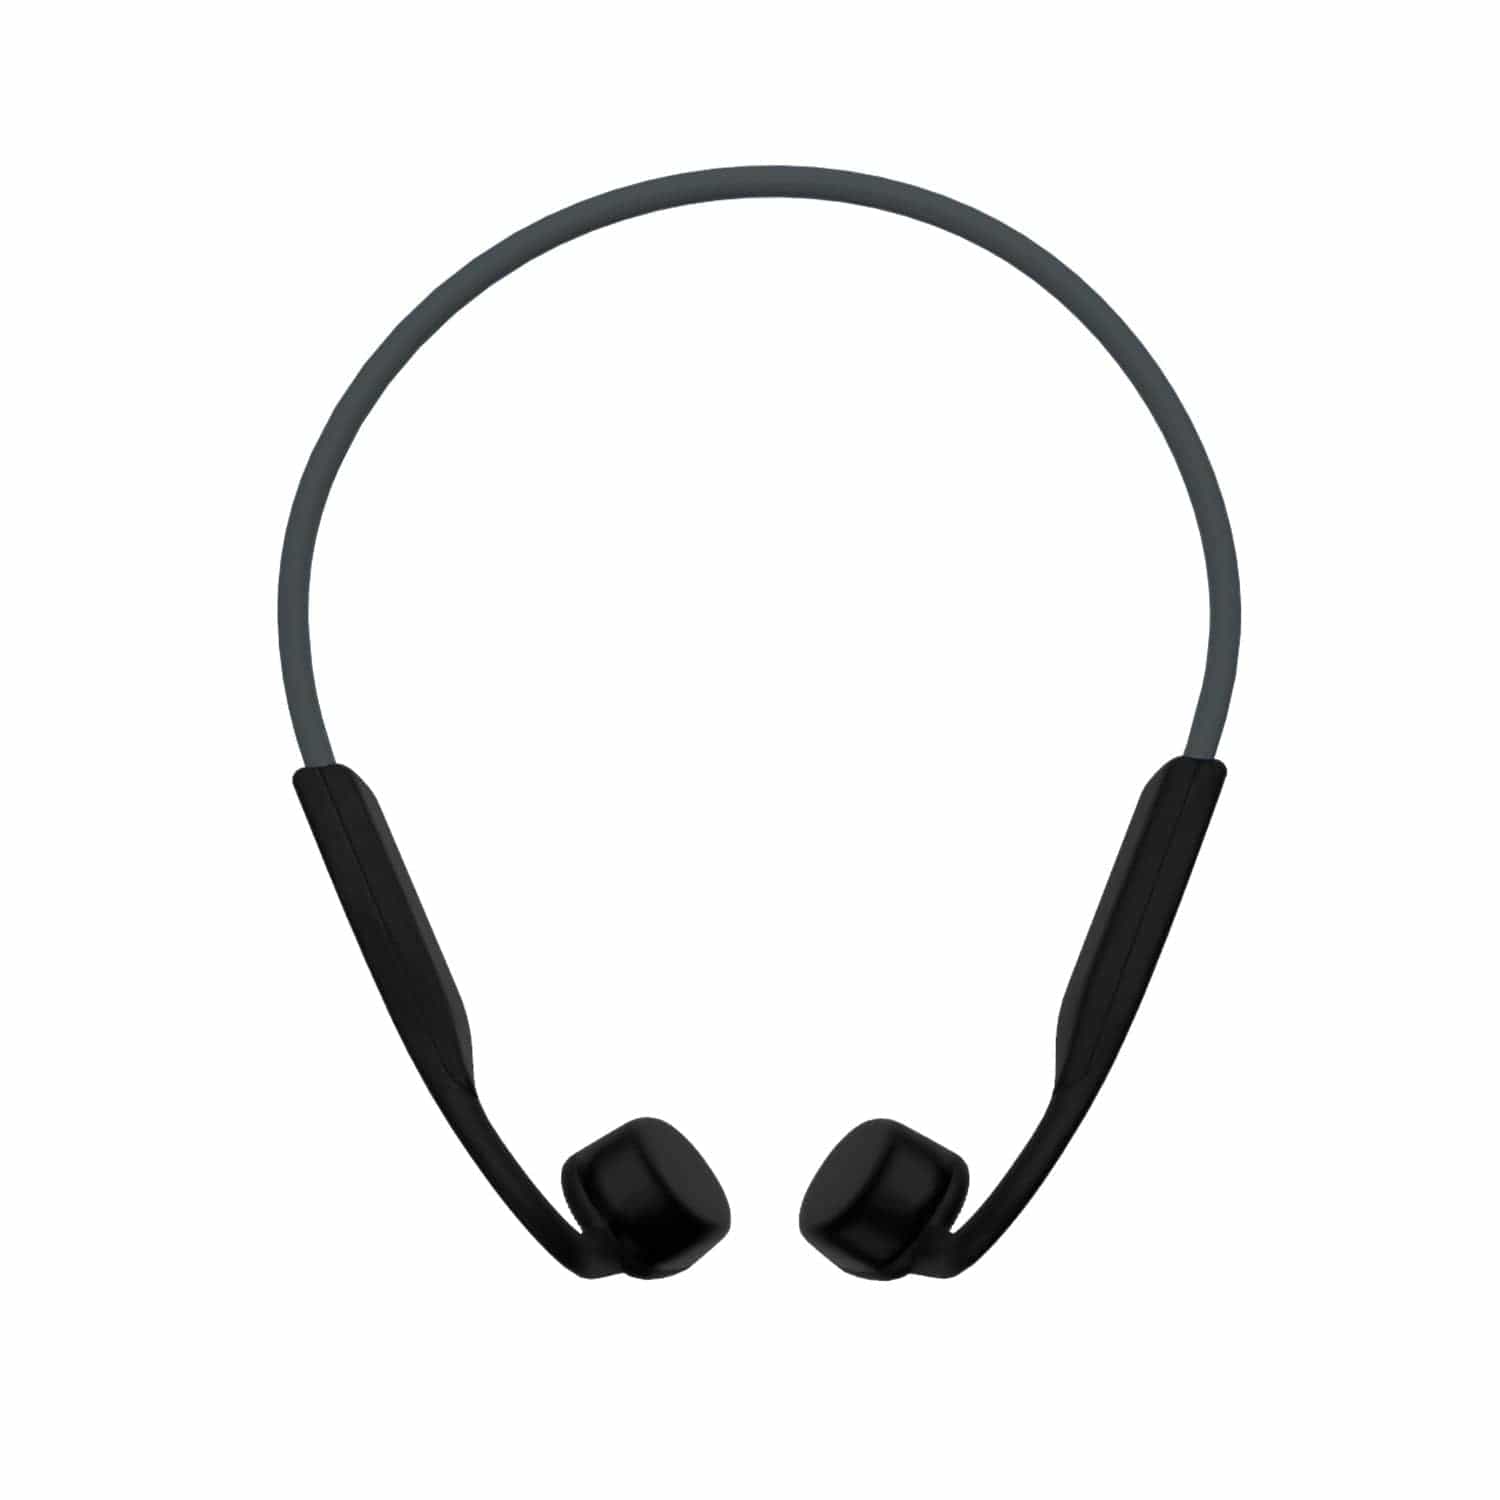 Shokz OpenMove Wireless Bone Conduction Headphones